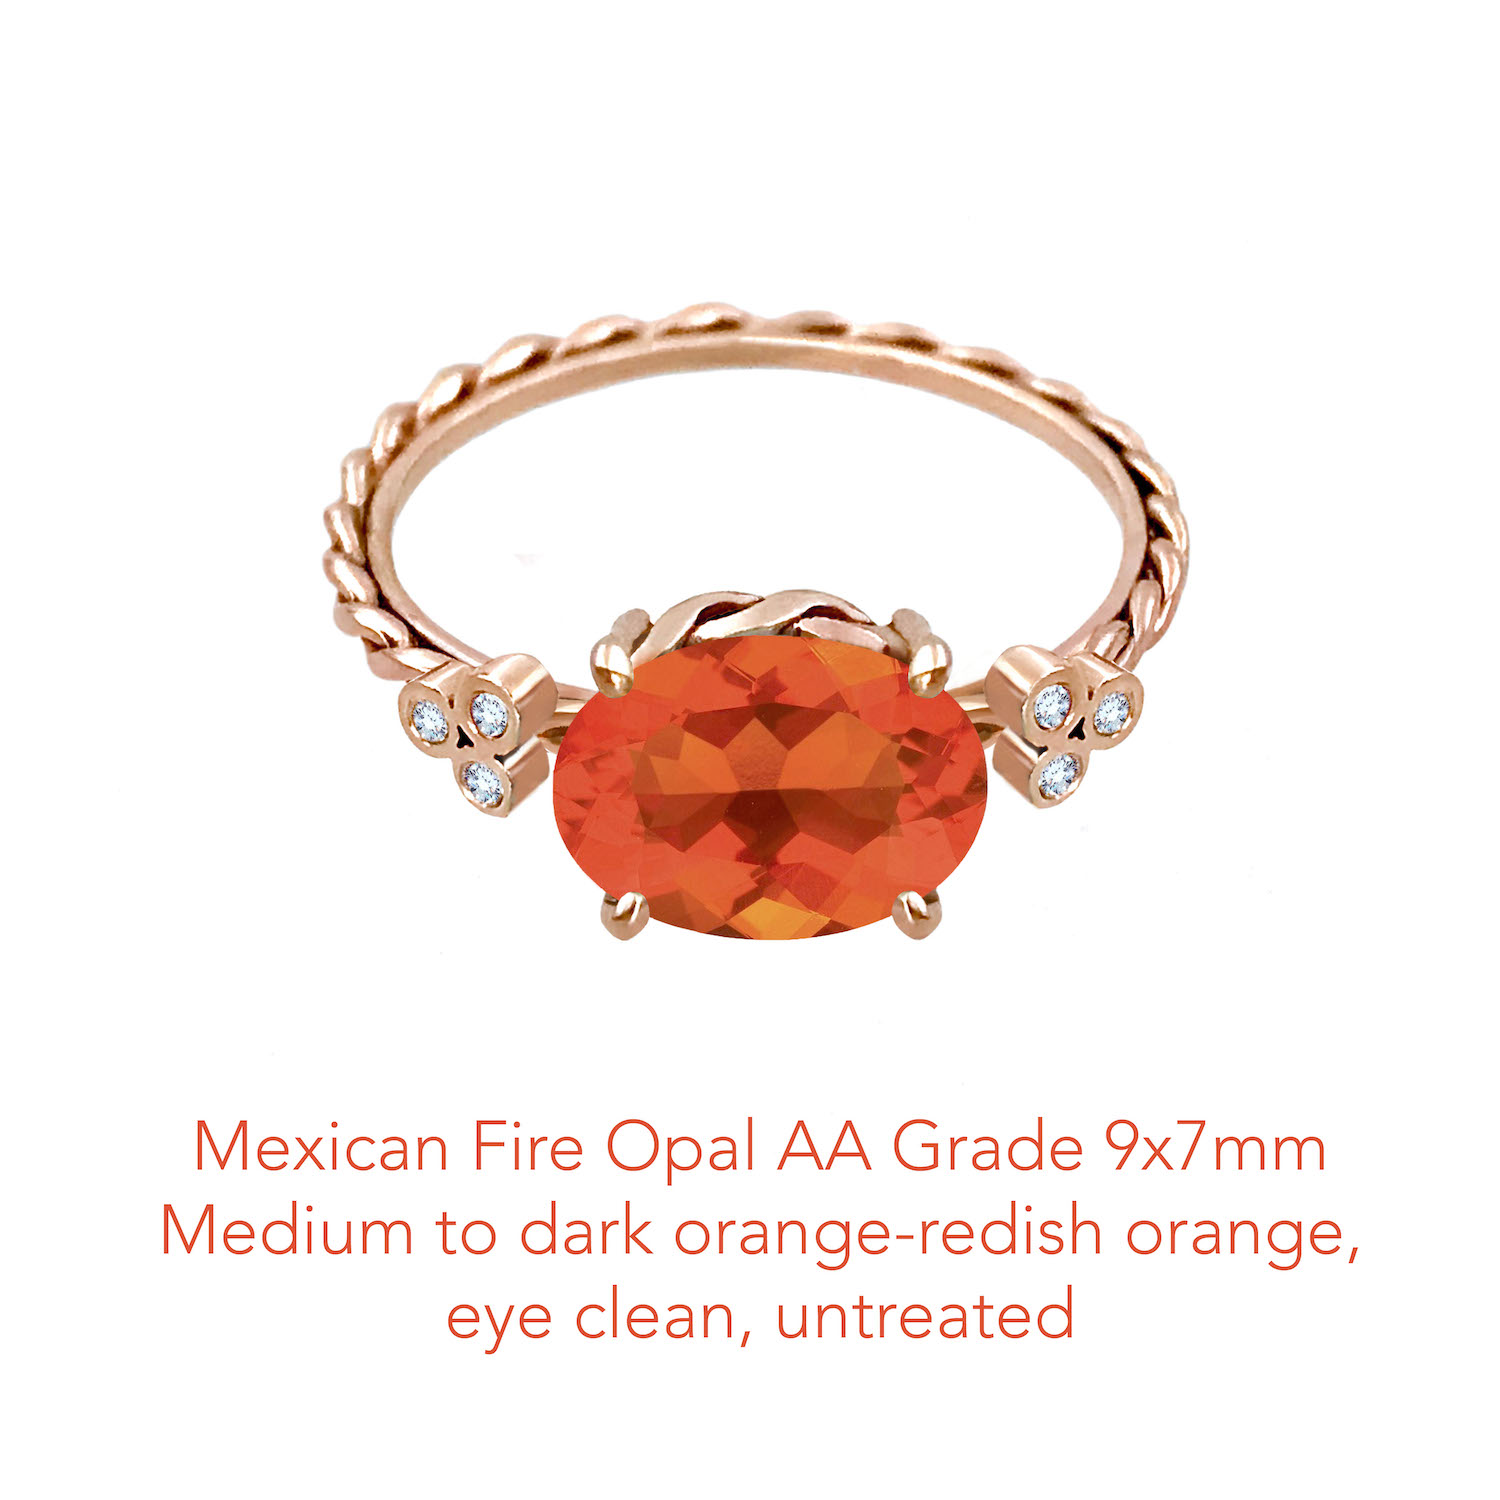 Opal Mexican Fire AA 9x7